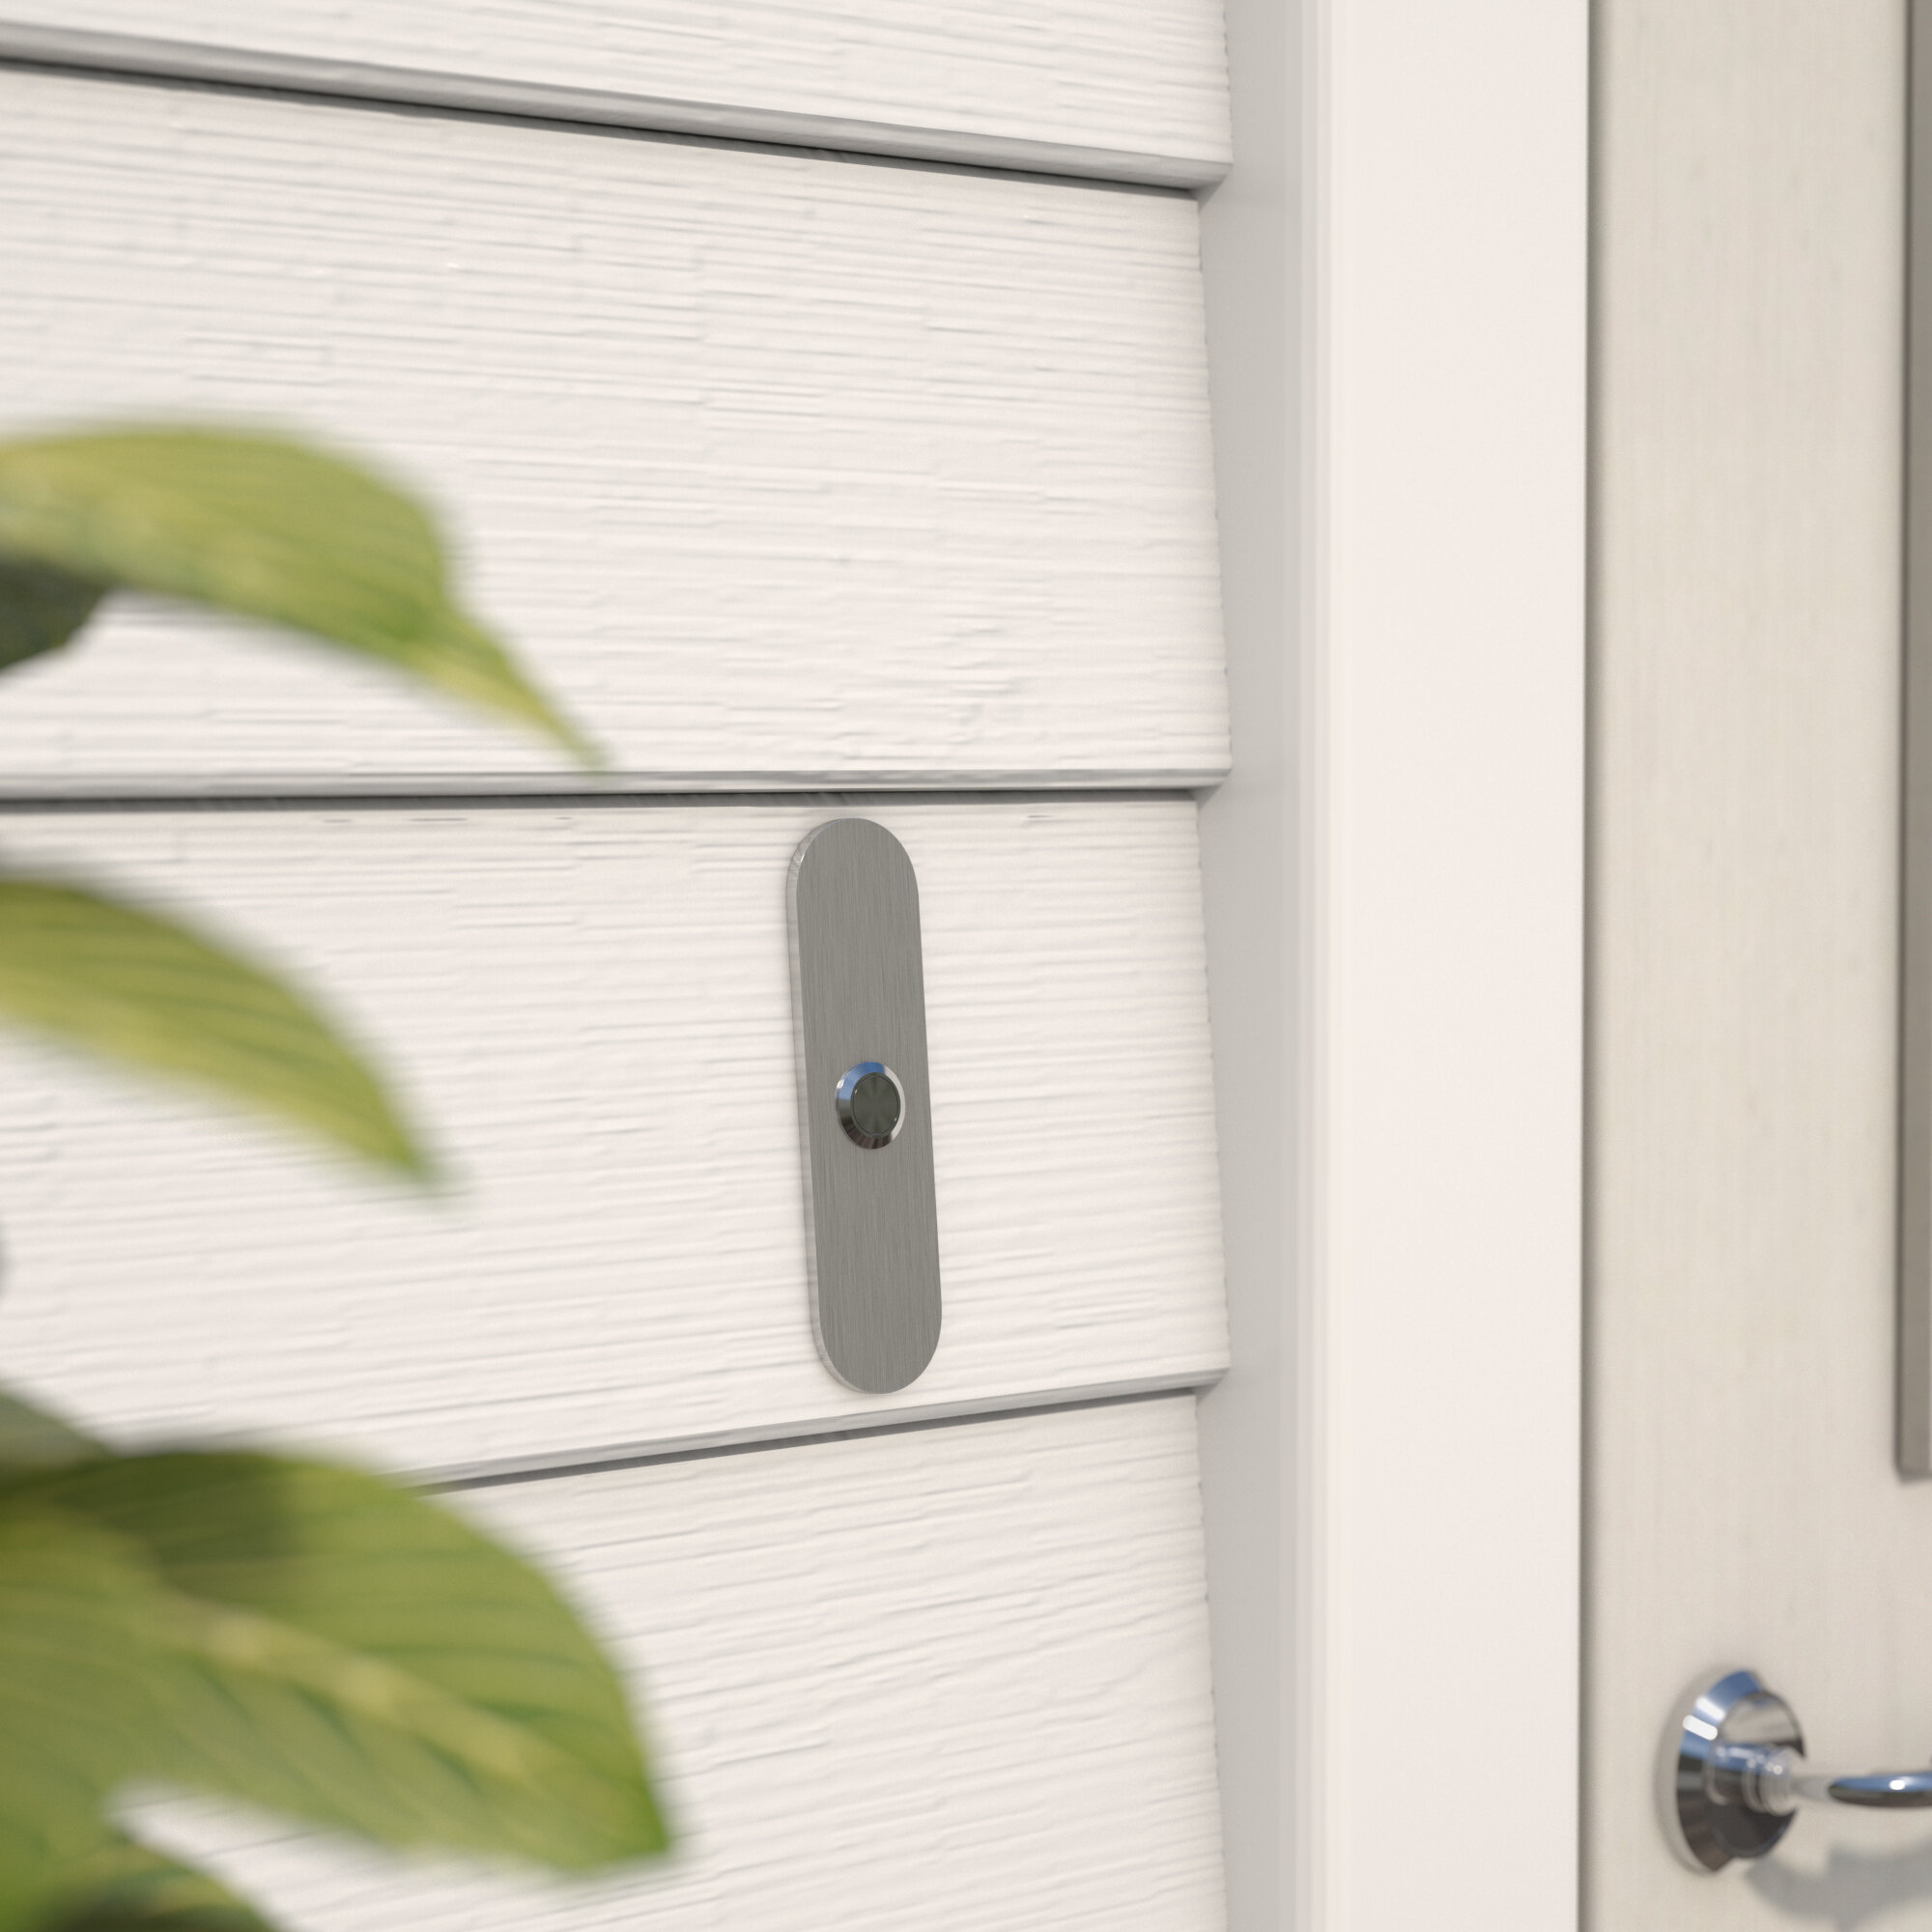 Waterwood Medium Rectangle Stainless Steel Doorbell Company/'s Coming WW162